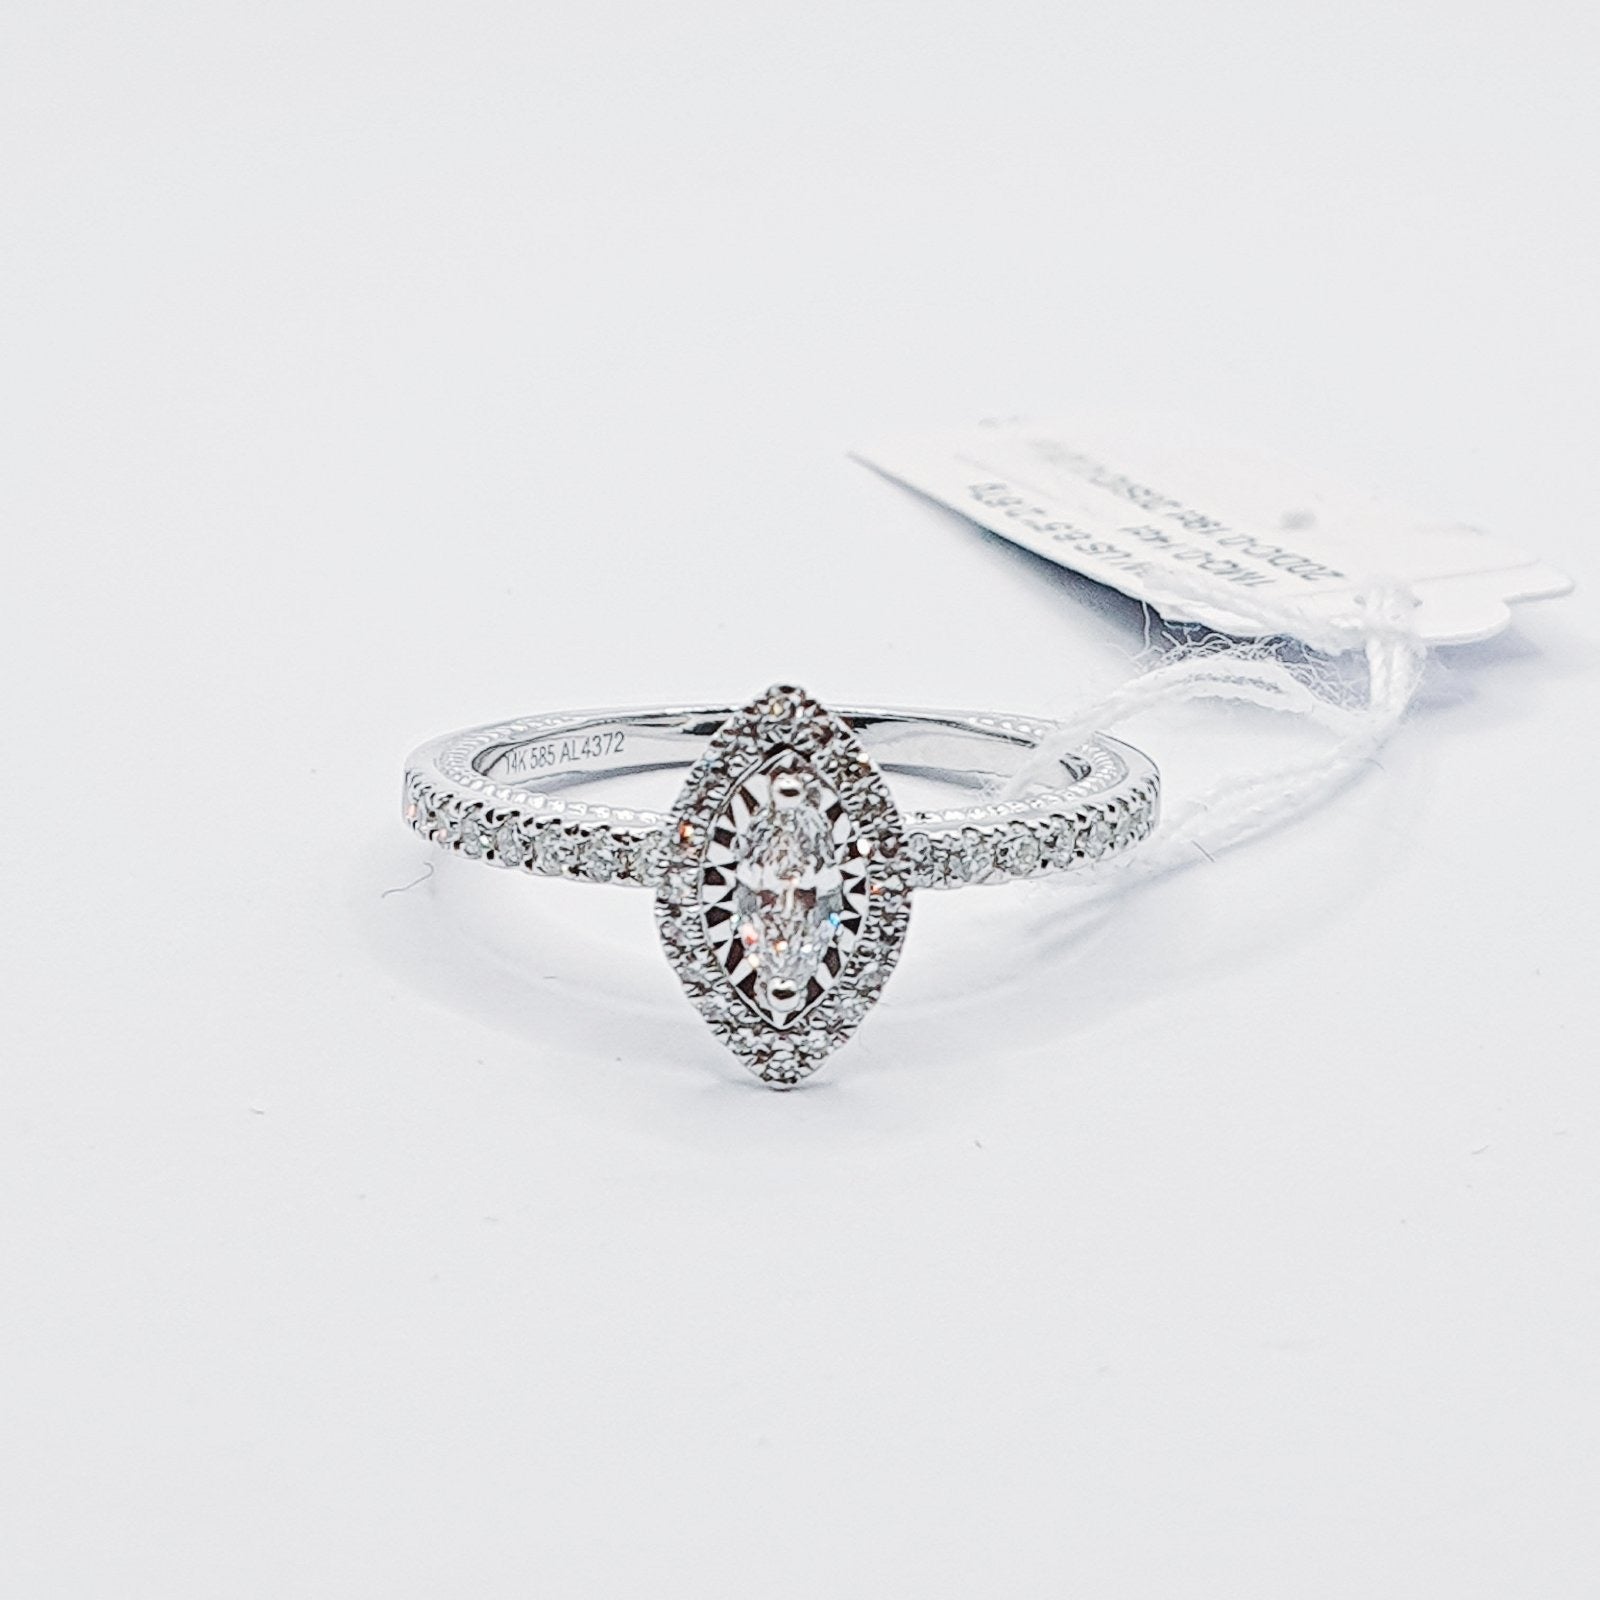 Engagement Rings, Vintage Diamond Engagement Sets, 14k White Gold Diamond  Solitaire & Wedding Band, Vintage Wedding Sets, Size 5.25, C2590 - Etsy